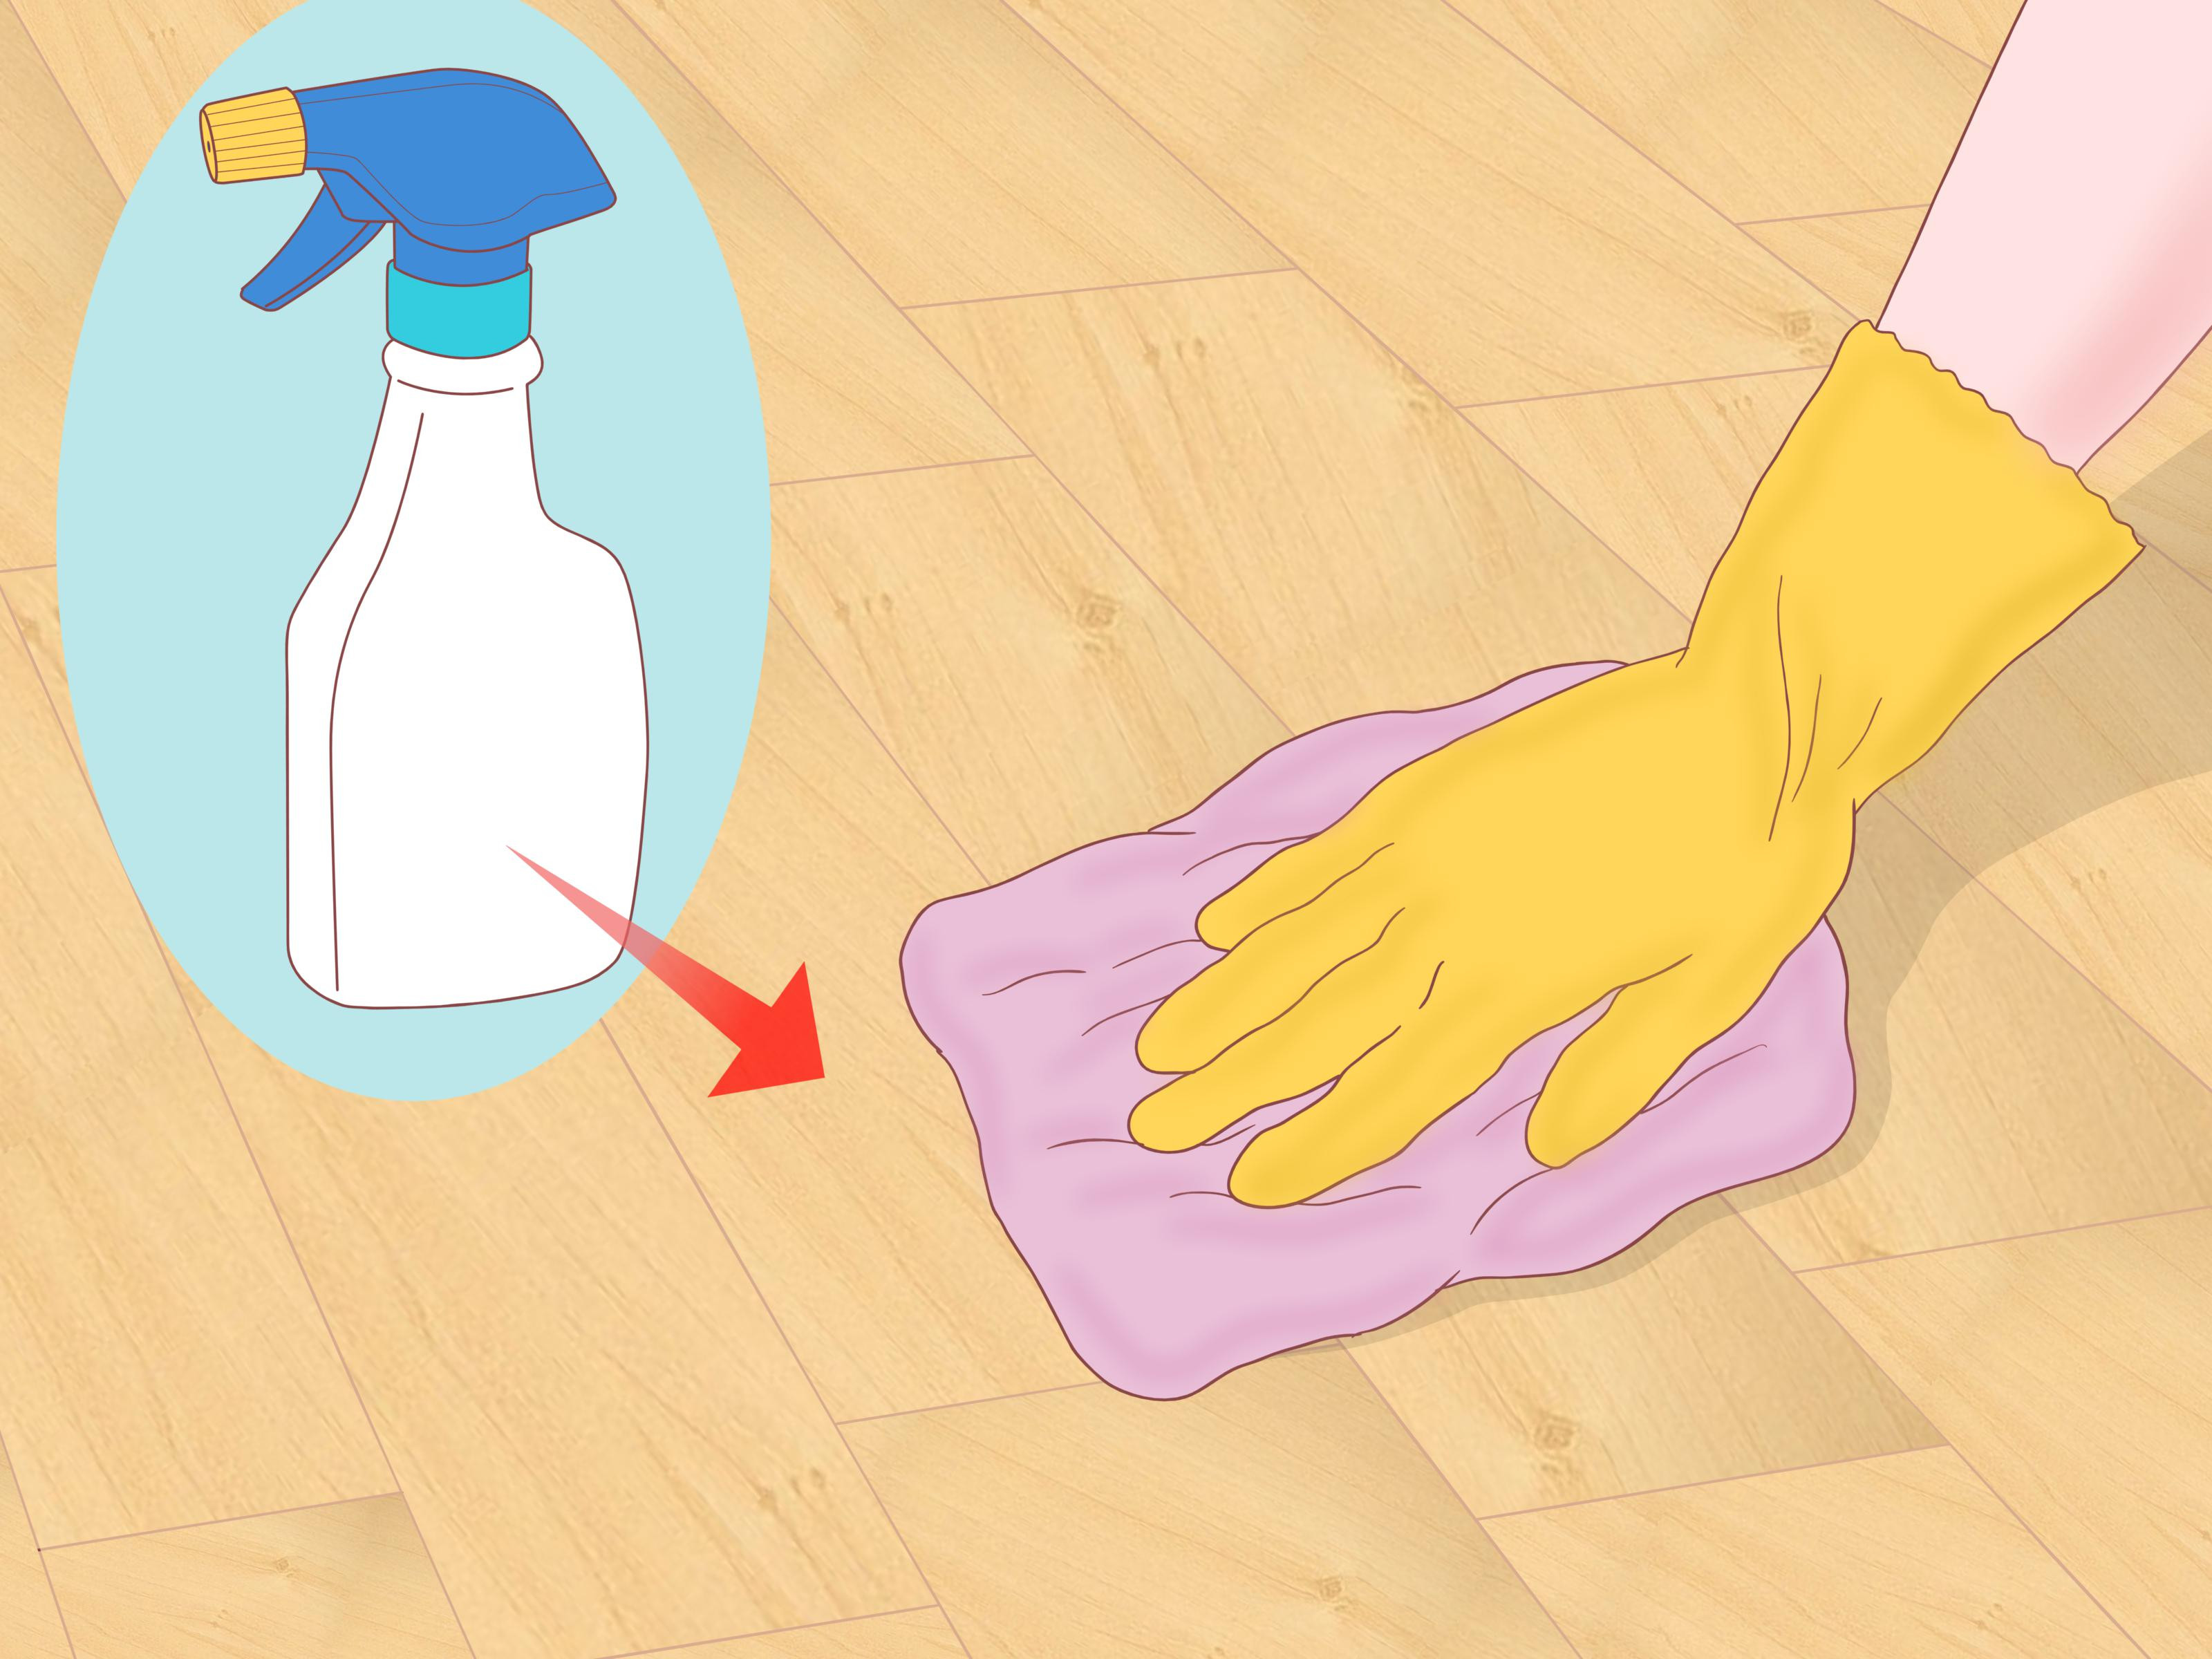 hardwood floor cleaning machine reviews of 3 ways to clean parquet floors wikihow regarding clean parquet floors step 12